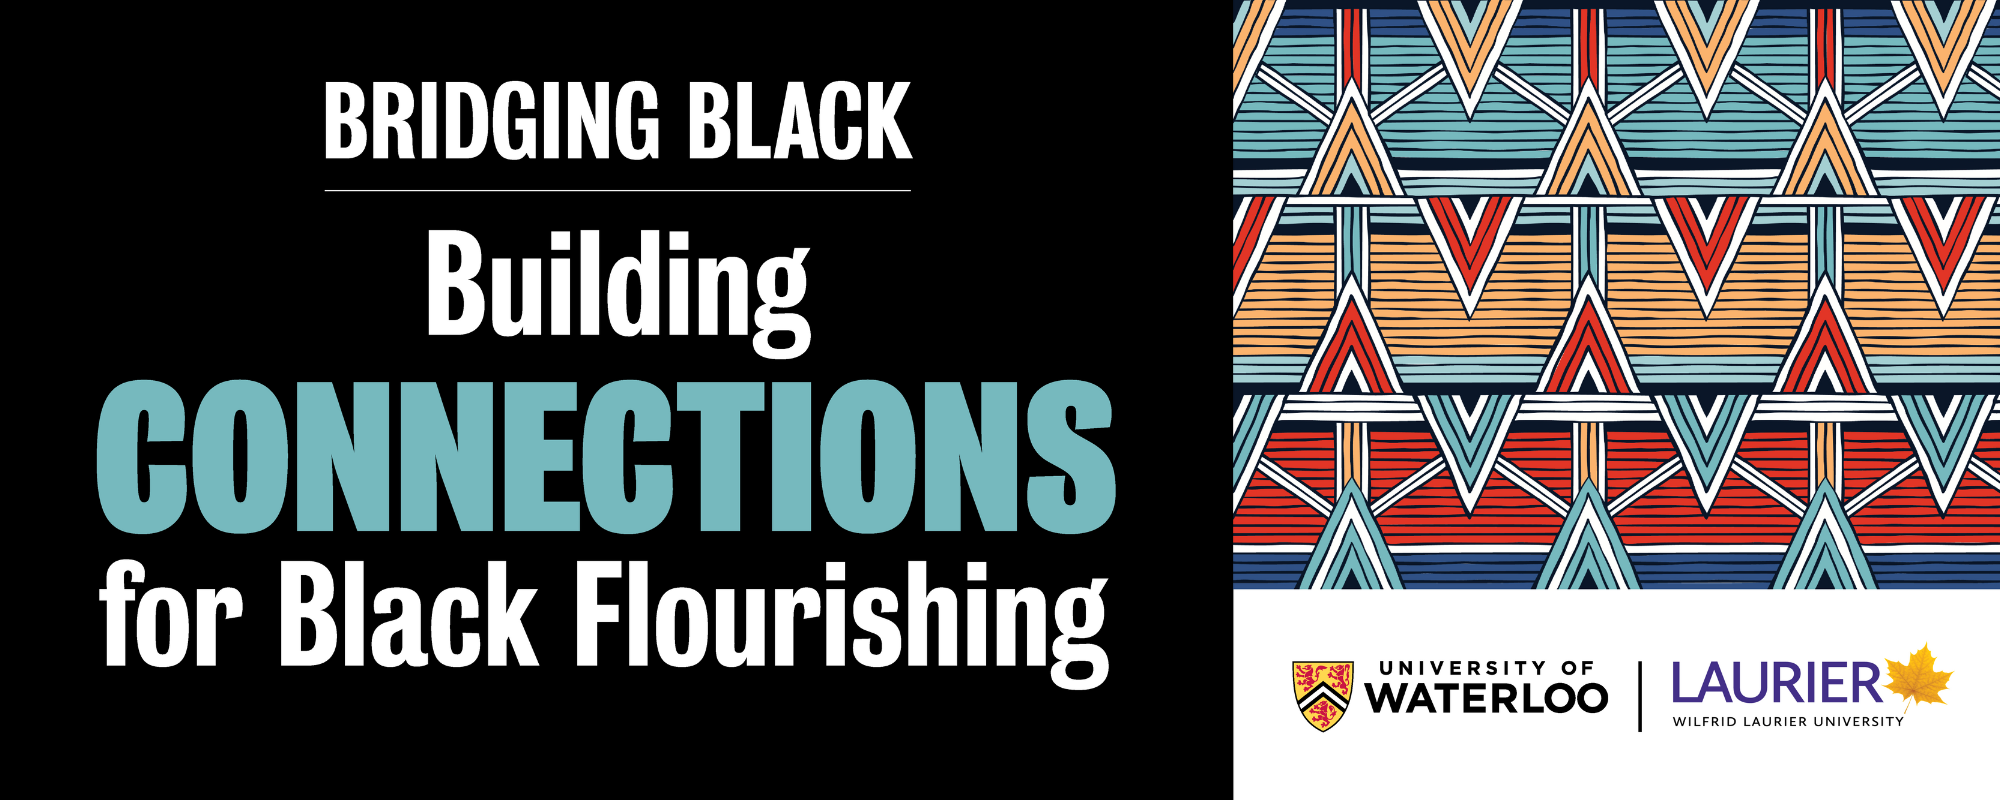 Bridging black connections for black flourishing